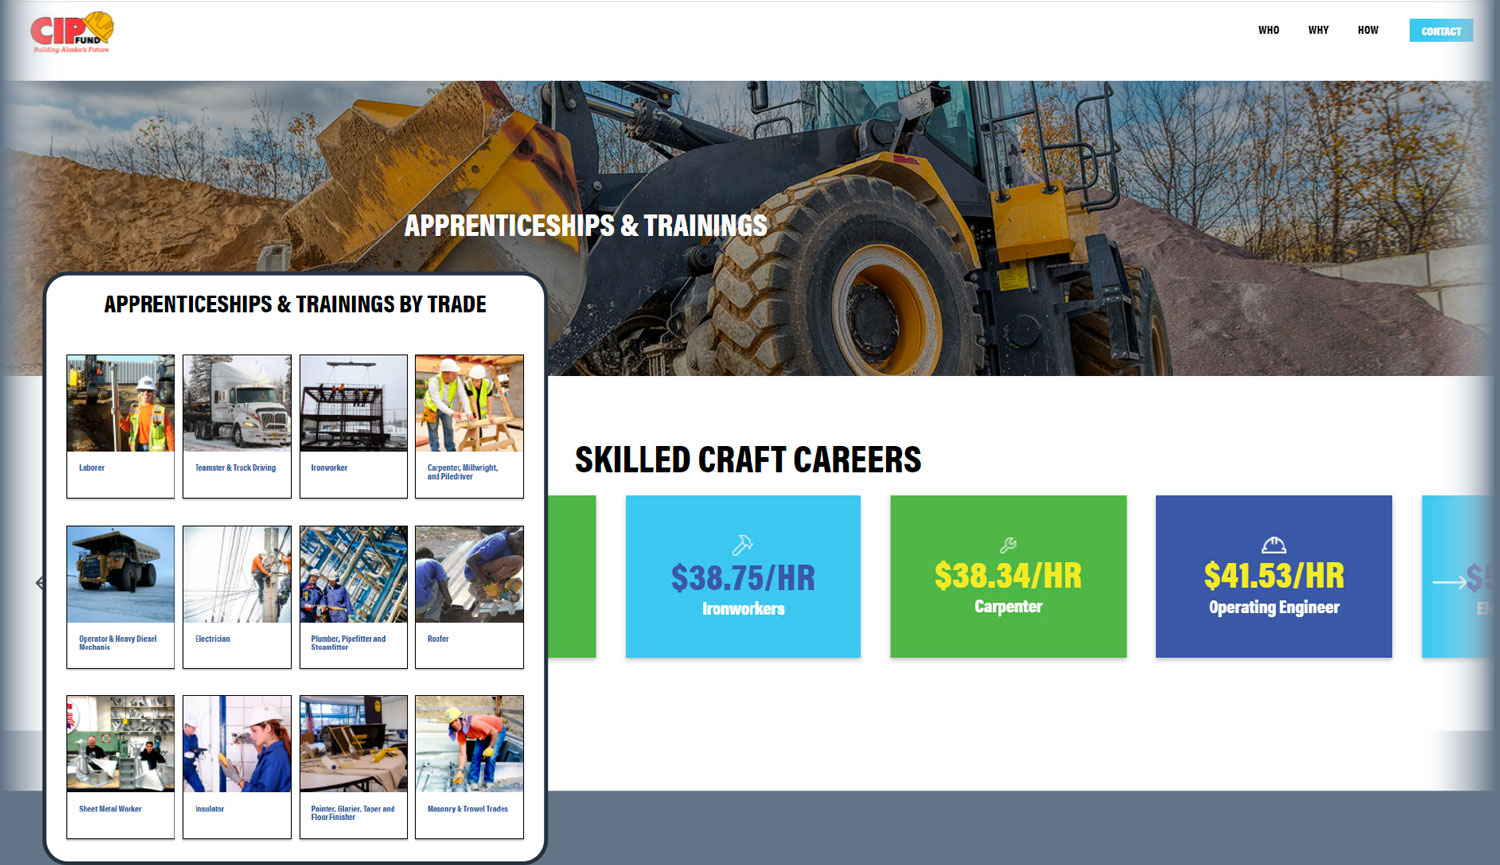 screen grab of the Apprenticeships & Training page of WeBuildAlaska.com